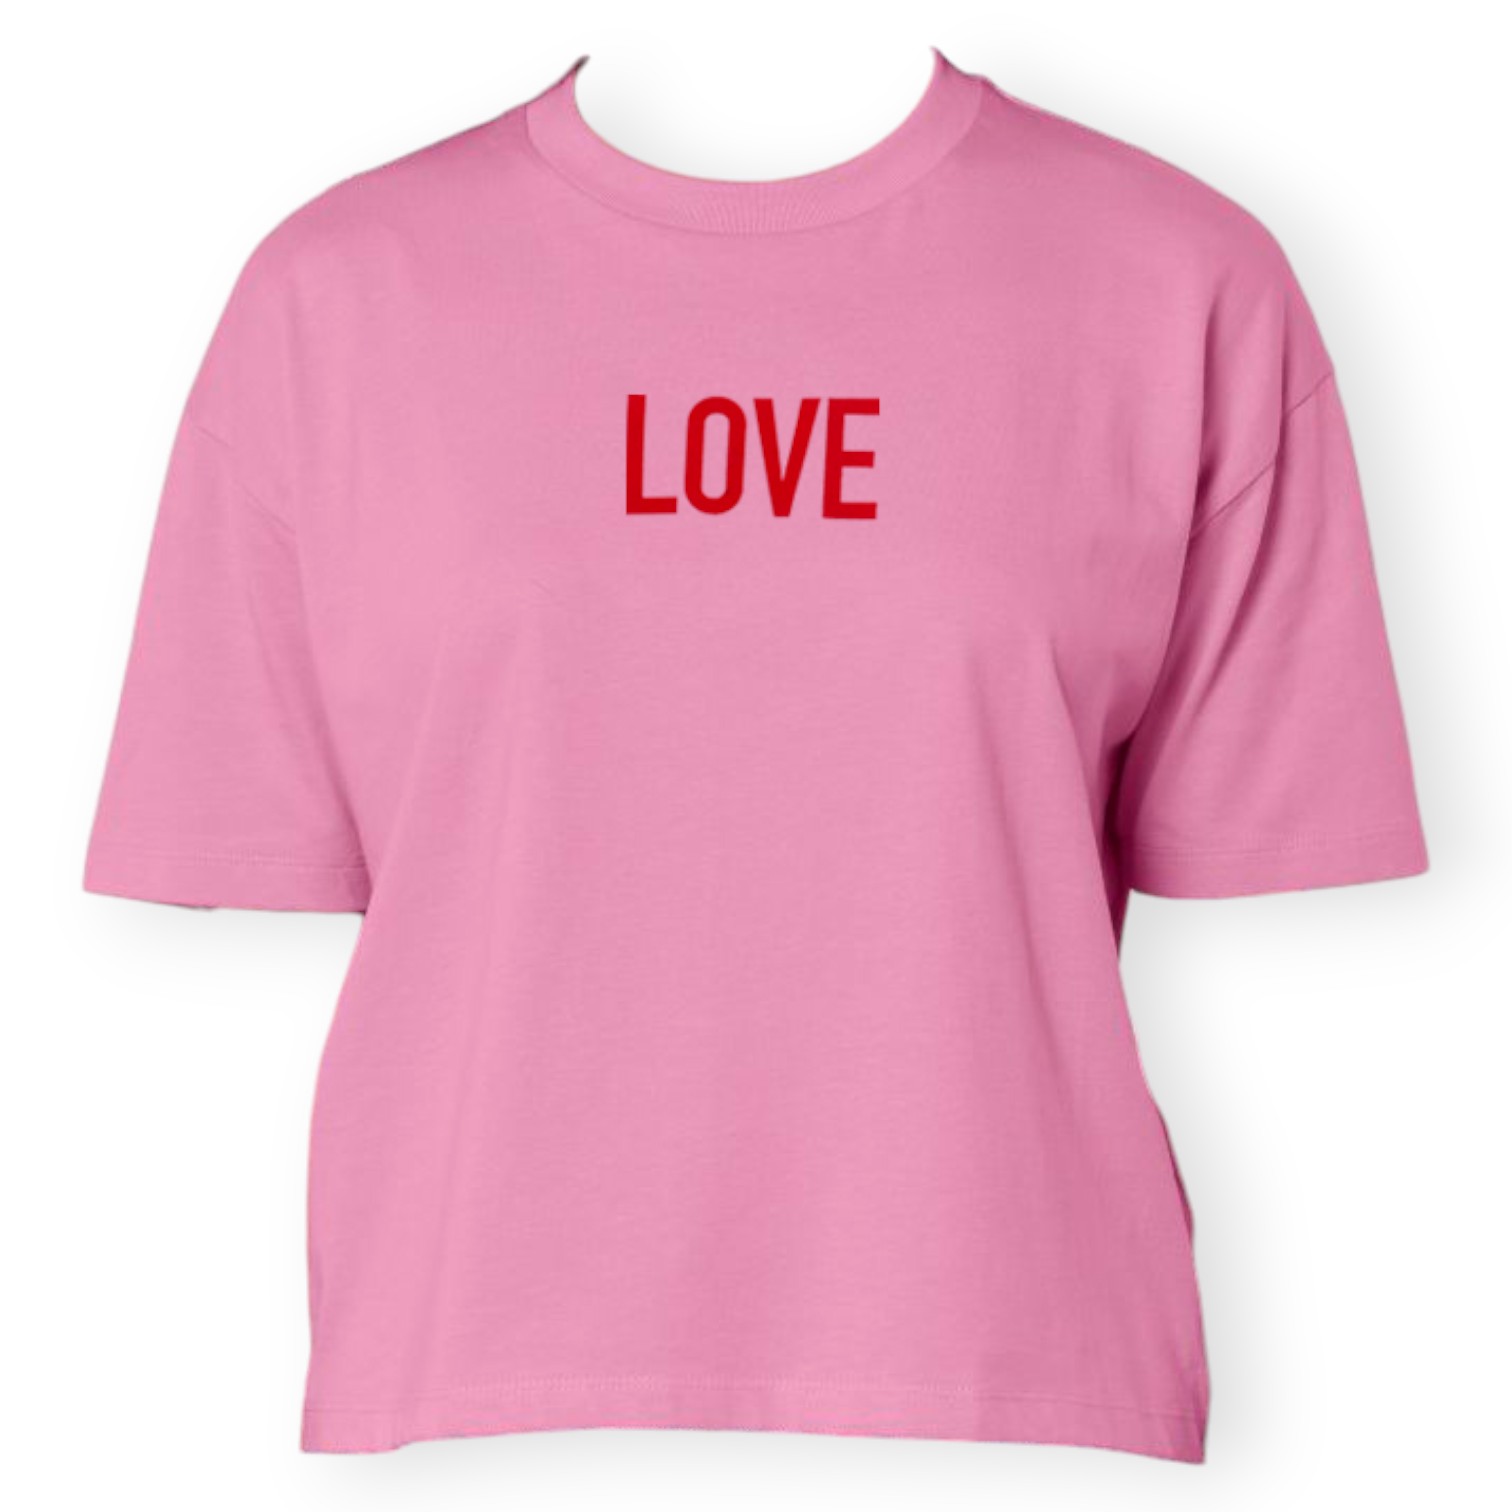 Boxy T-Shirt Love BRLN pink/rot